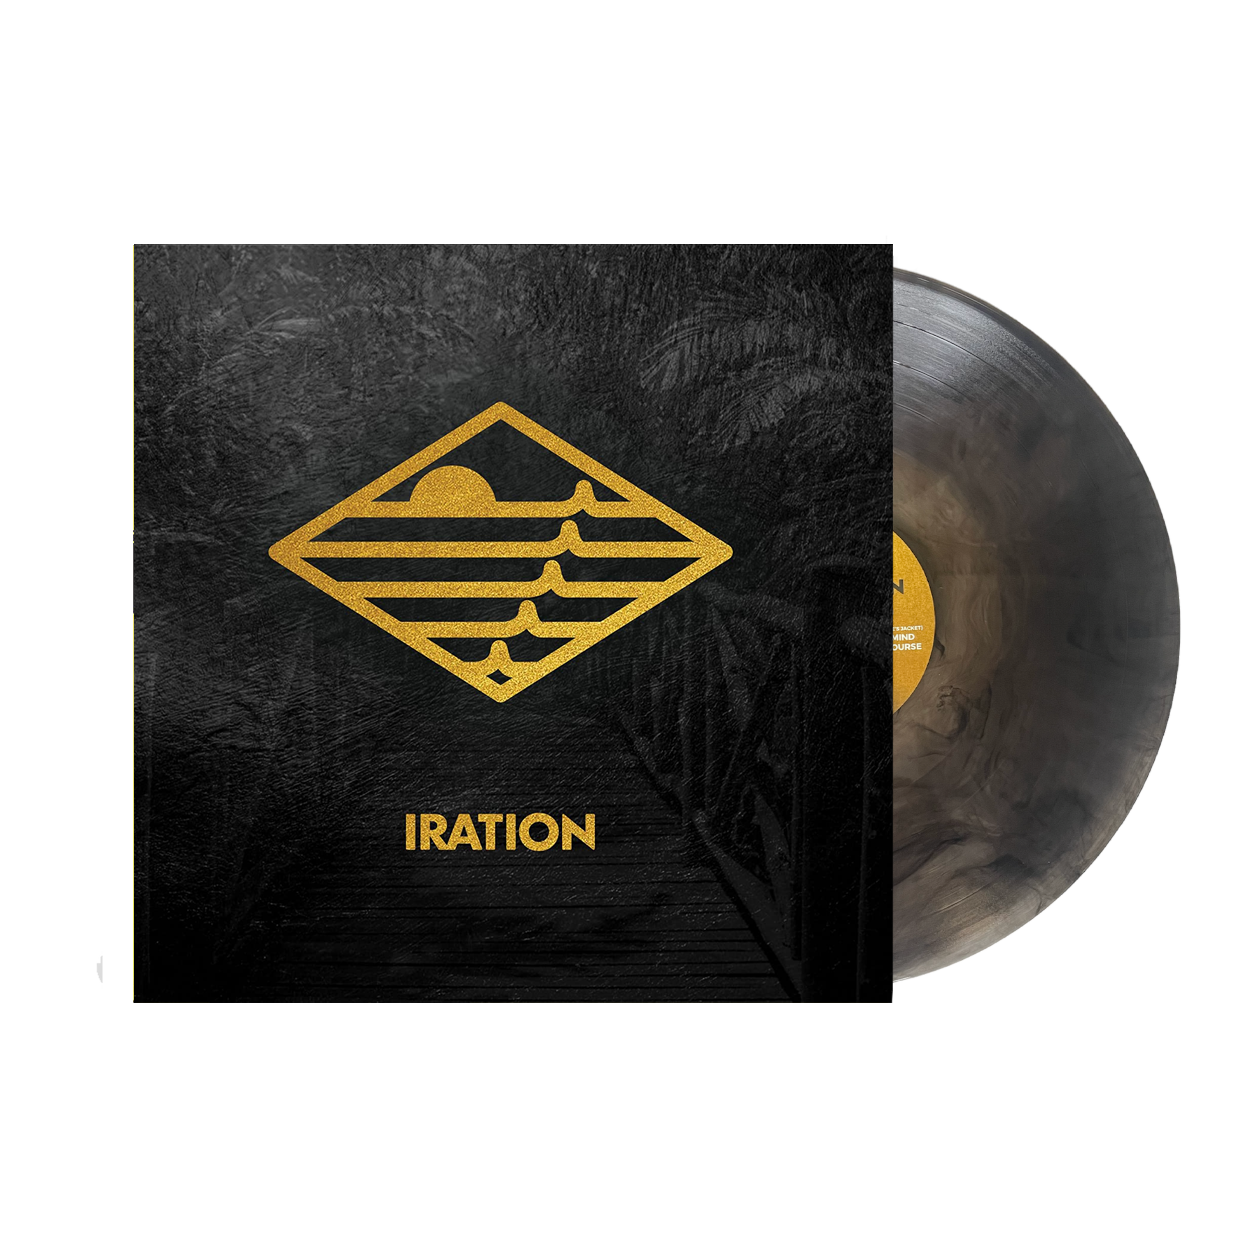 Iration 2018 Vinyl (Smoke)